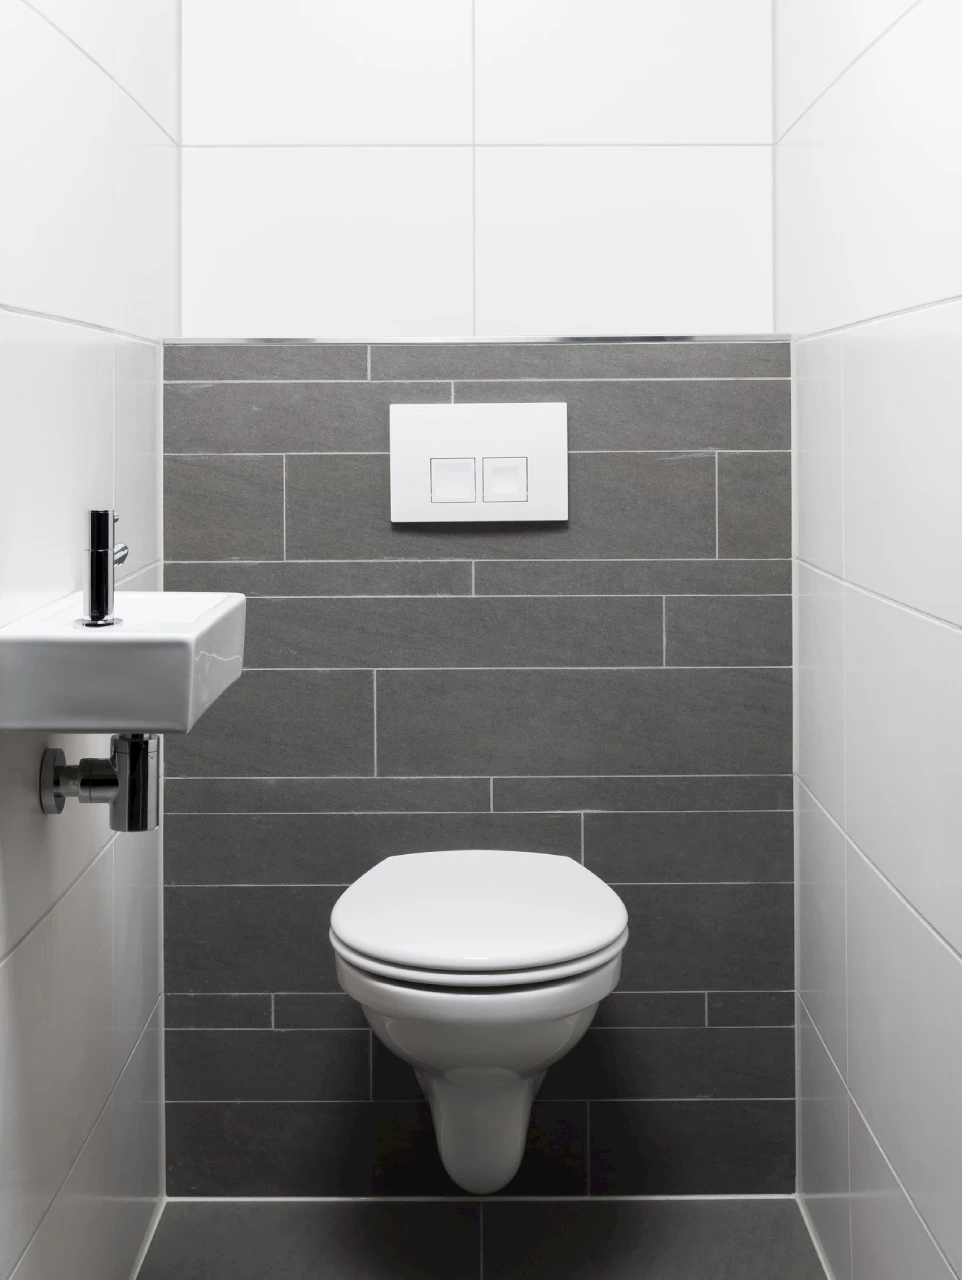 geweld Vertrouwen Betekenis Compleet toilet Black & White kopen? | Sani4All